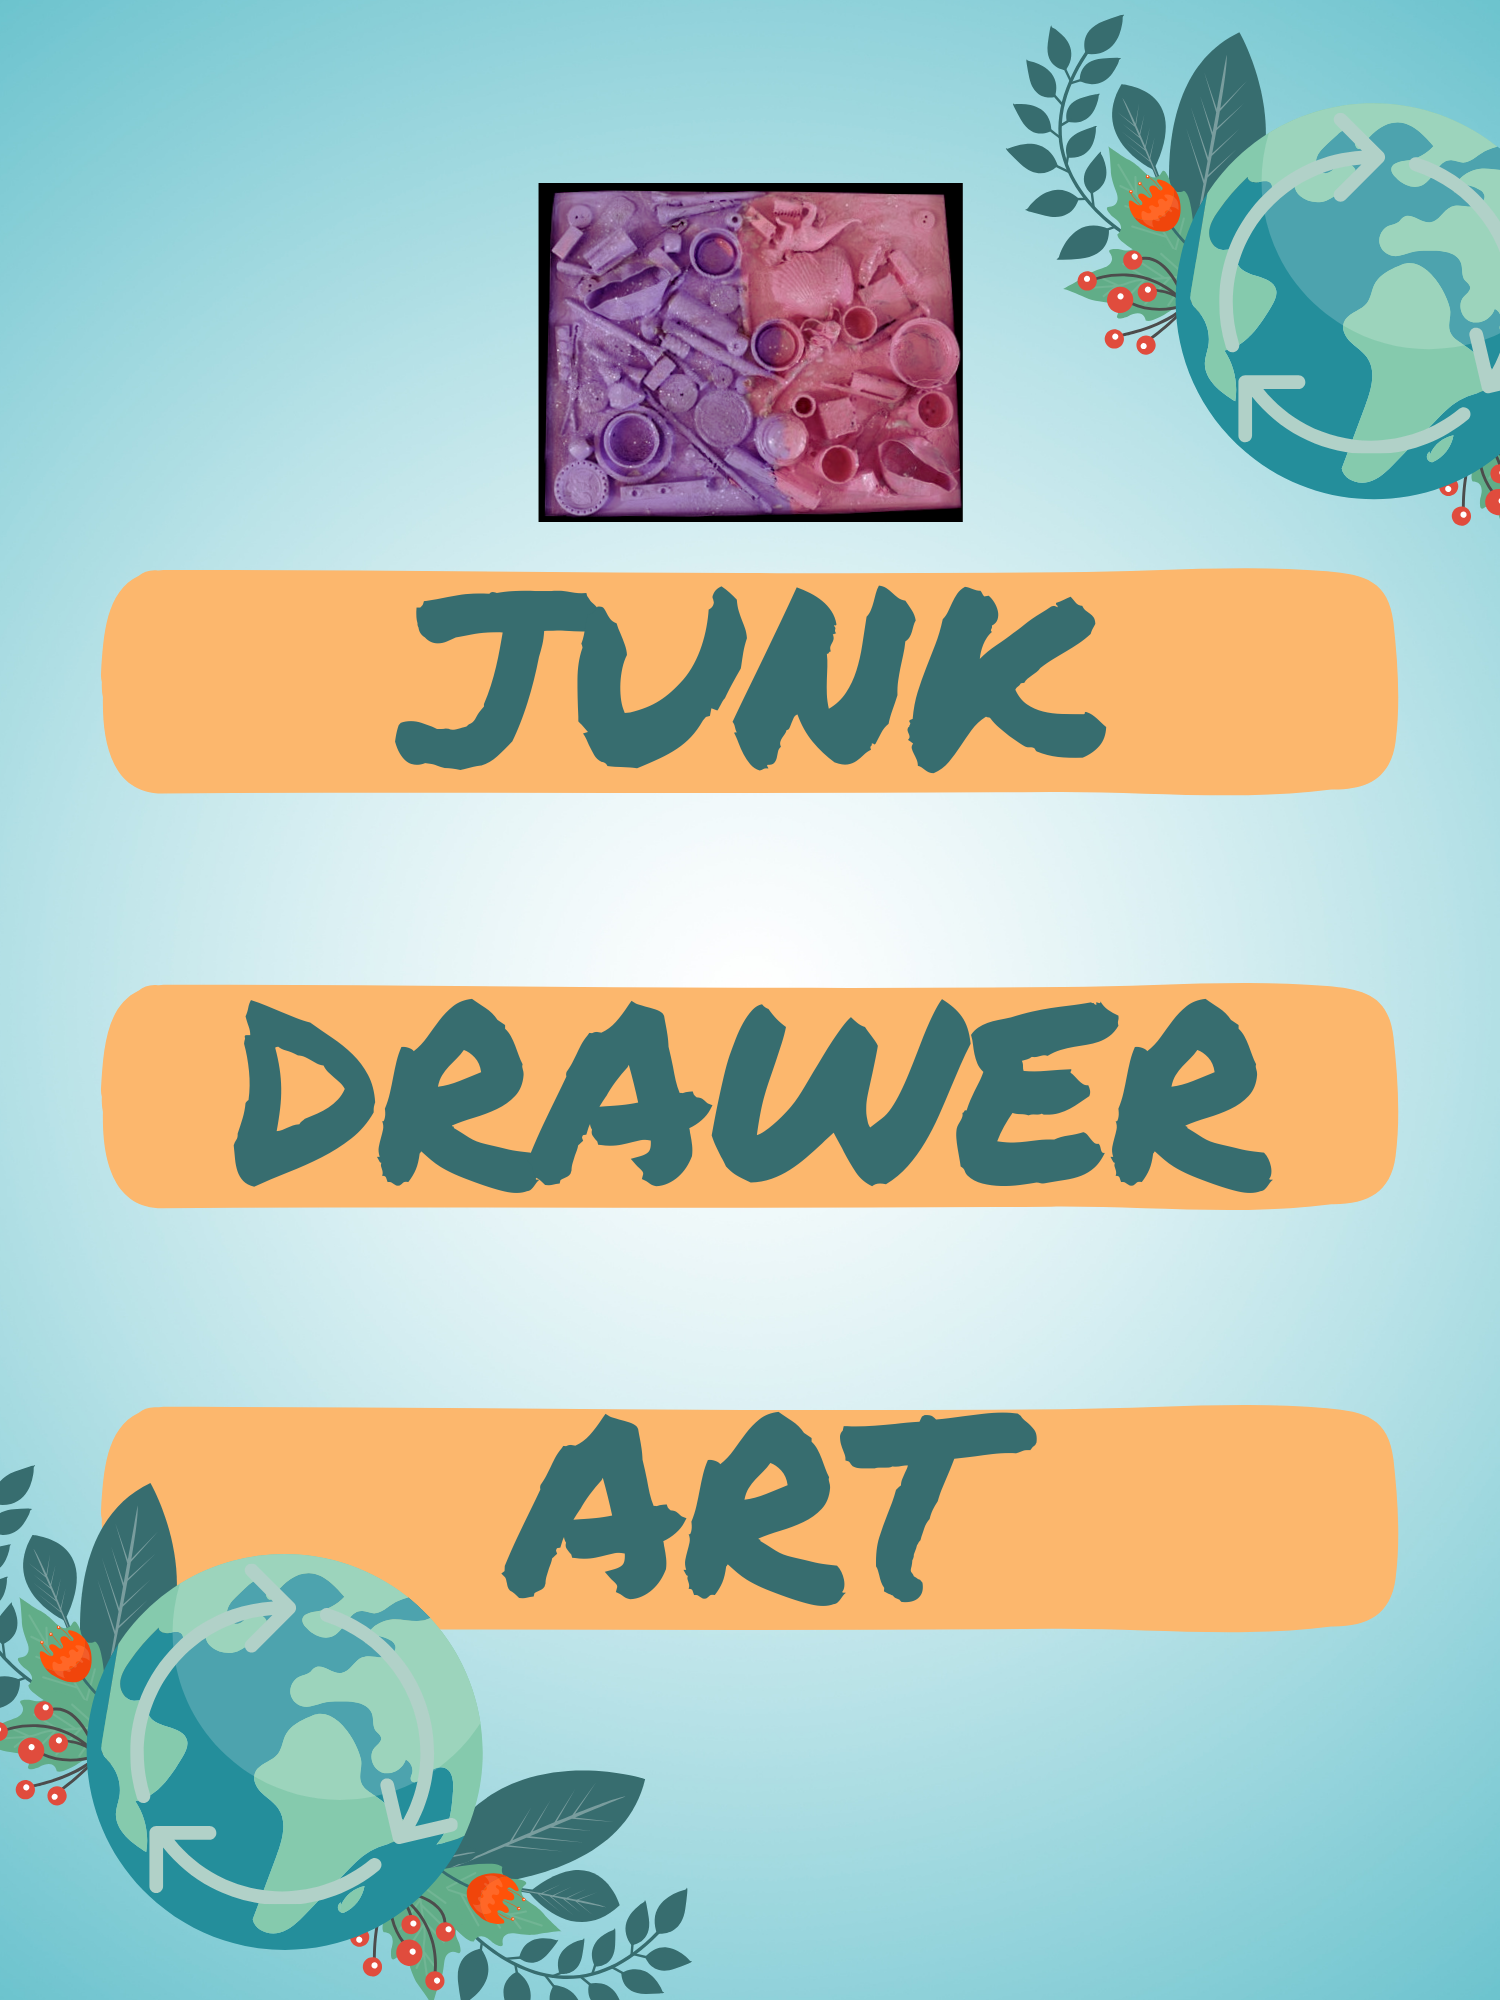 junk drawer art